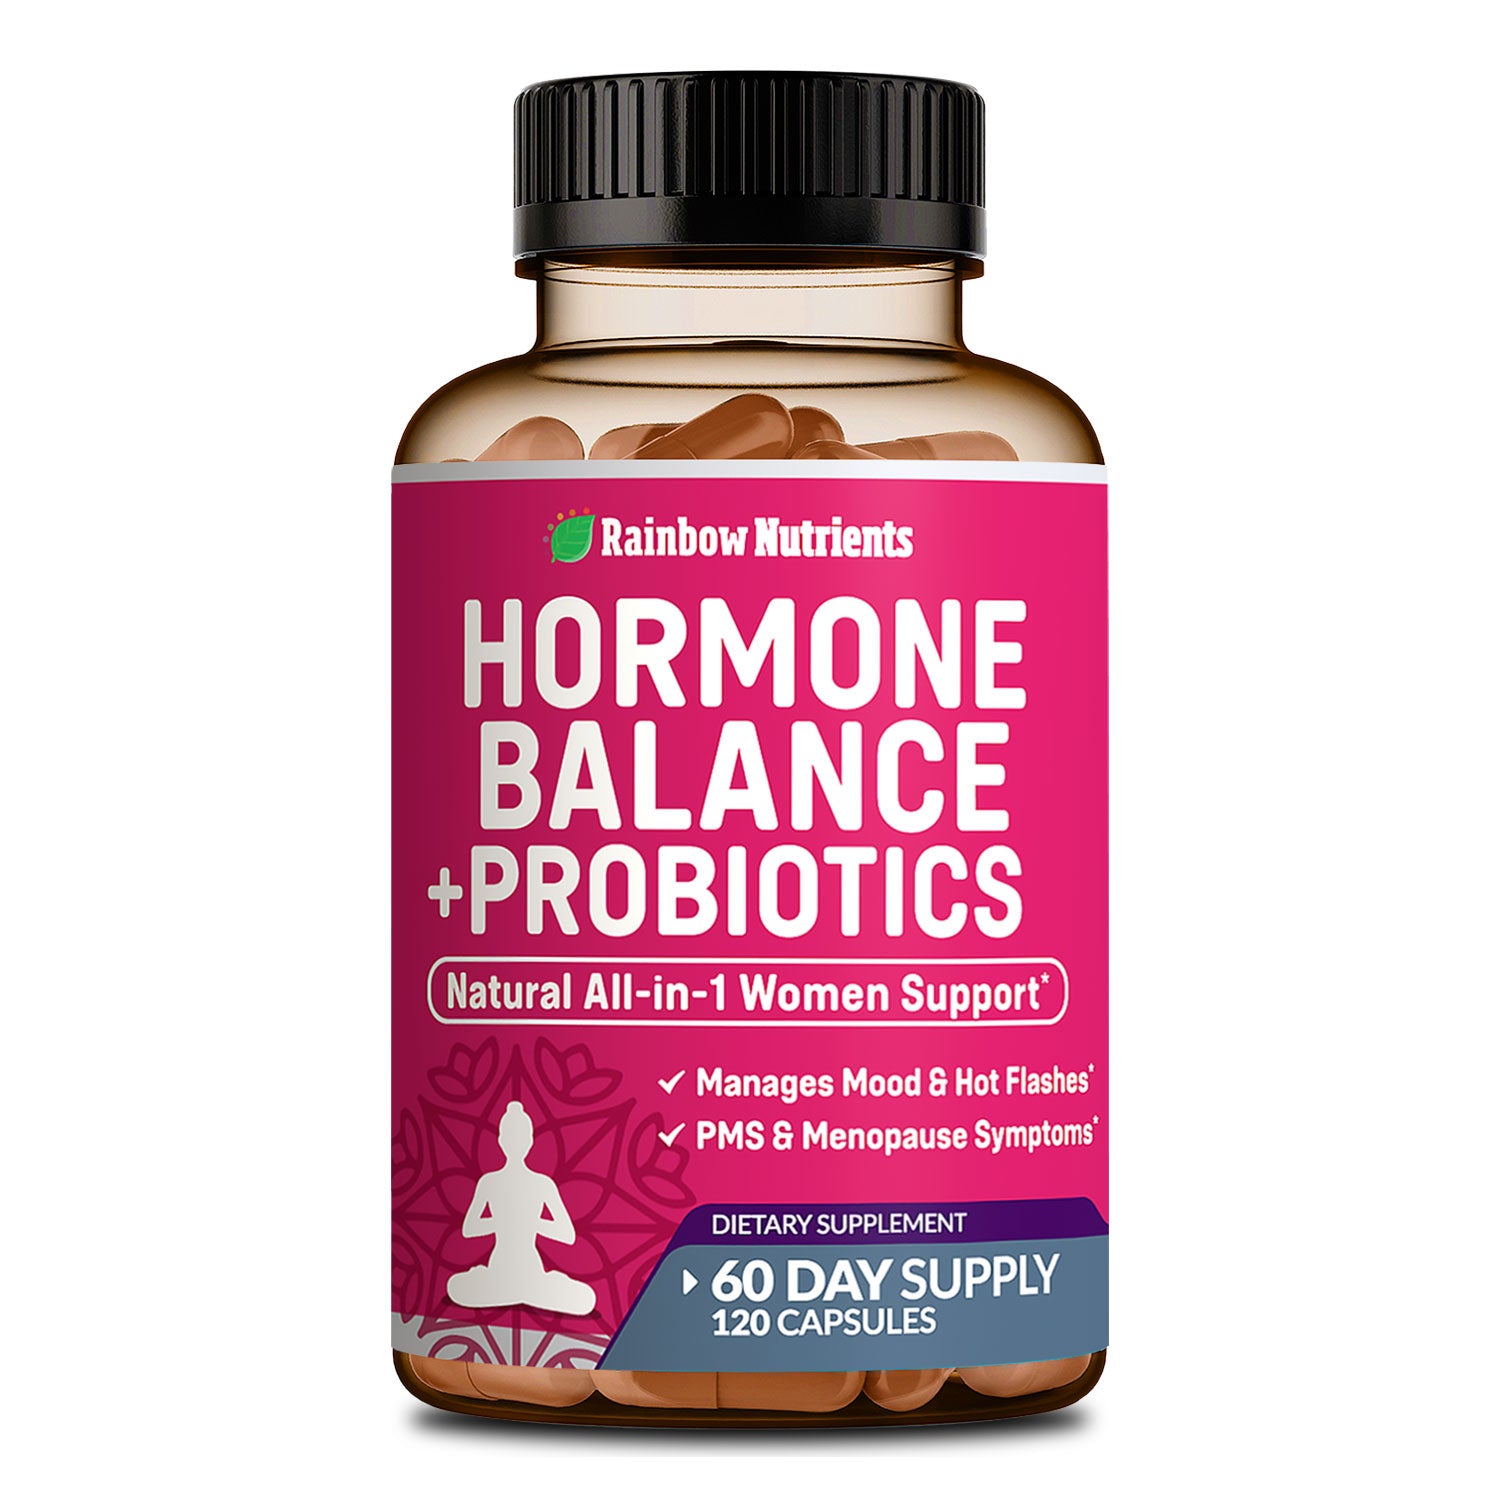 Hormone Balance + Probiotics for Women